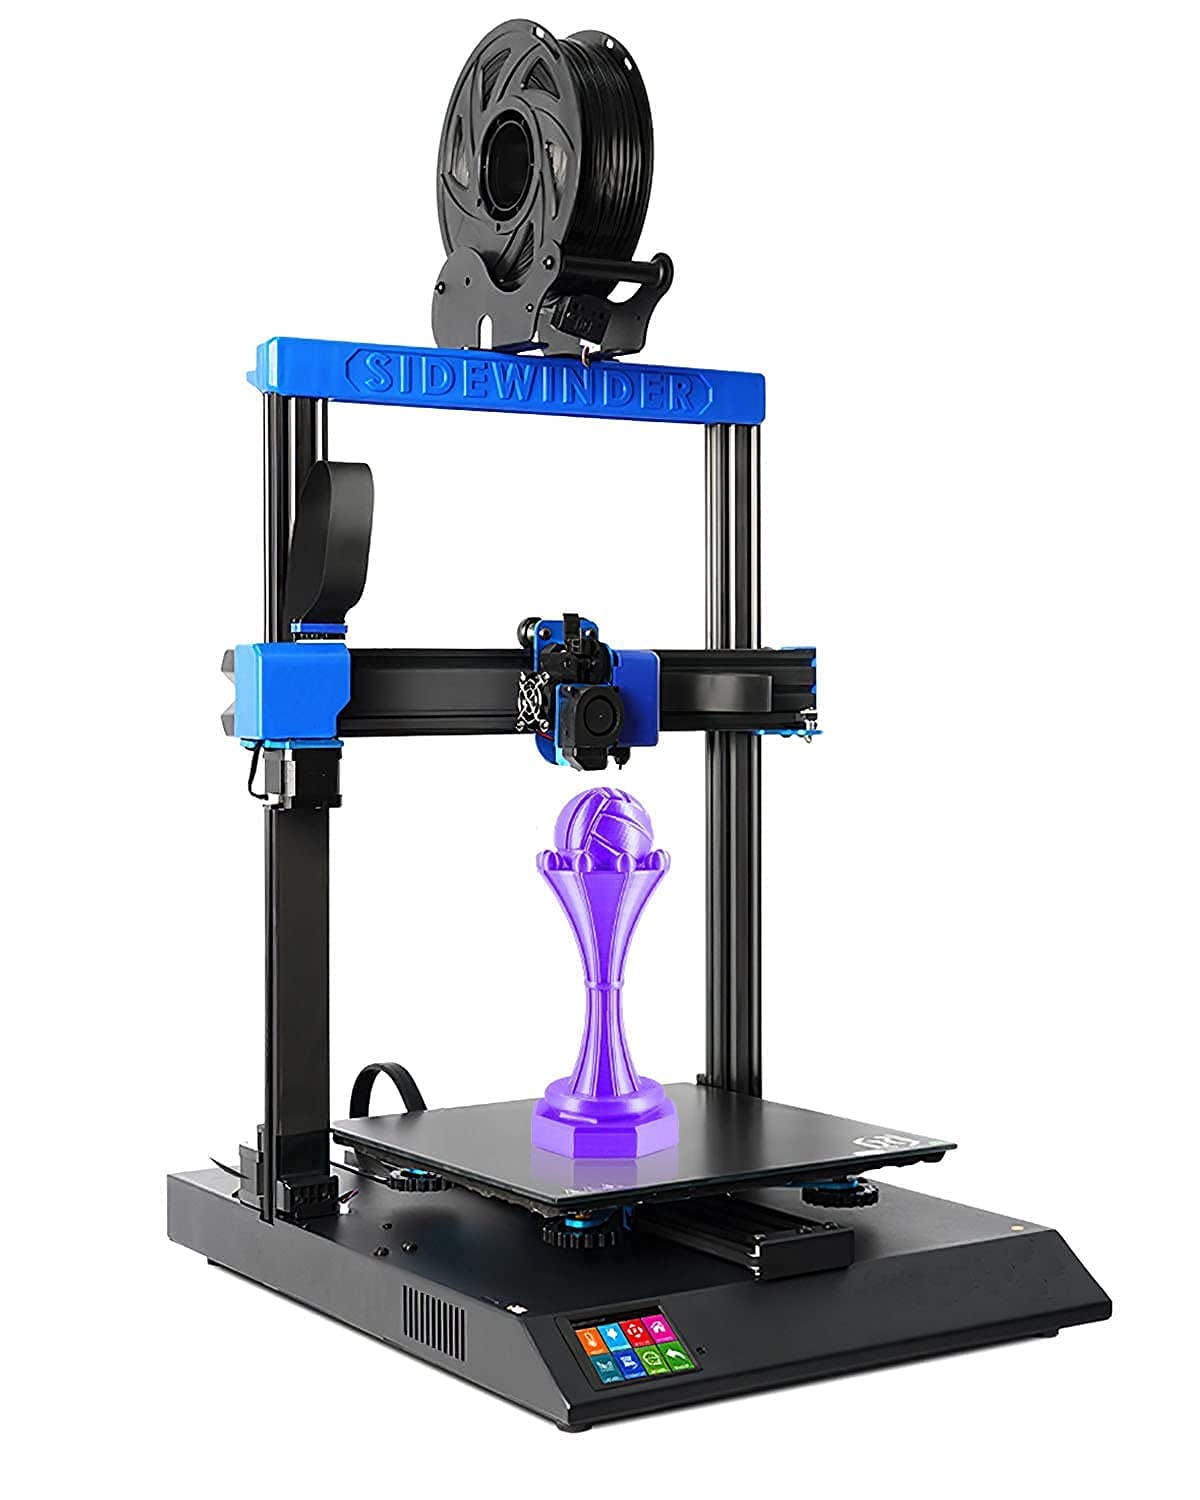 Sidewinder X2 | Geekbuying Mega Sale: Hot 3D Printer Deals